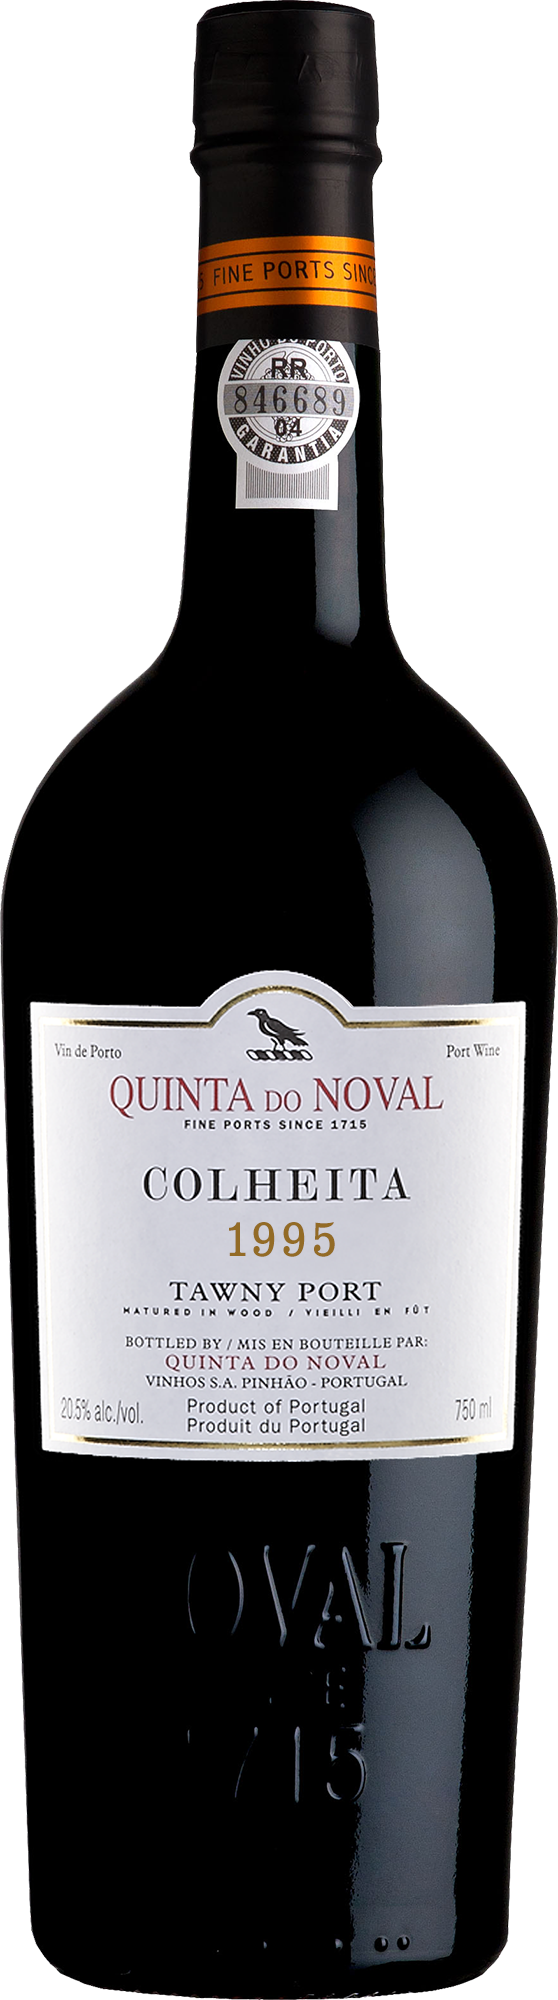 Quinta do Noval Tawny Port Colheita 1995 (with Gift Box)